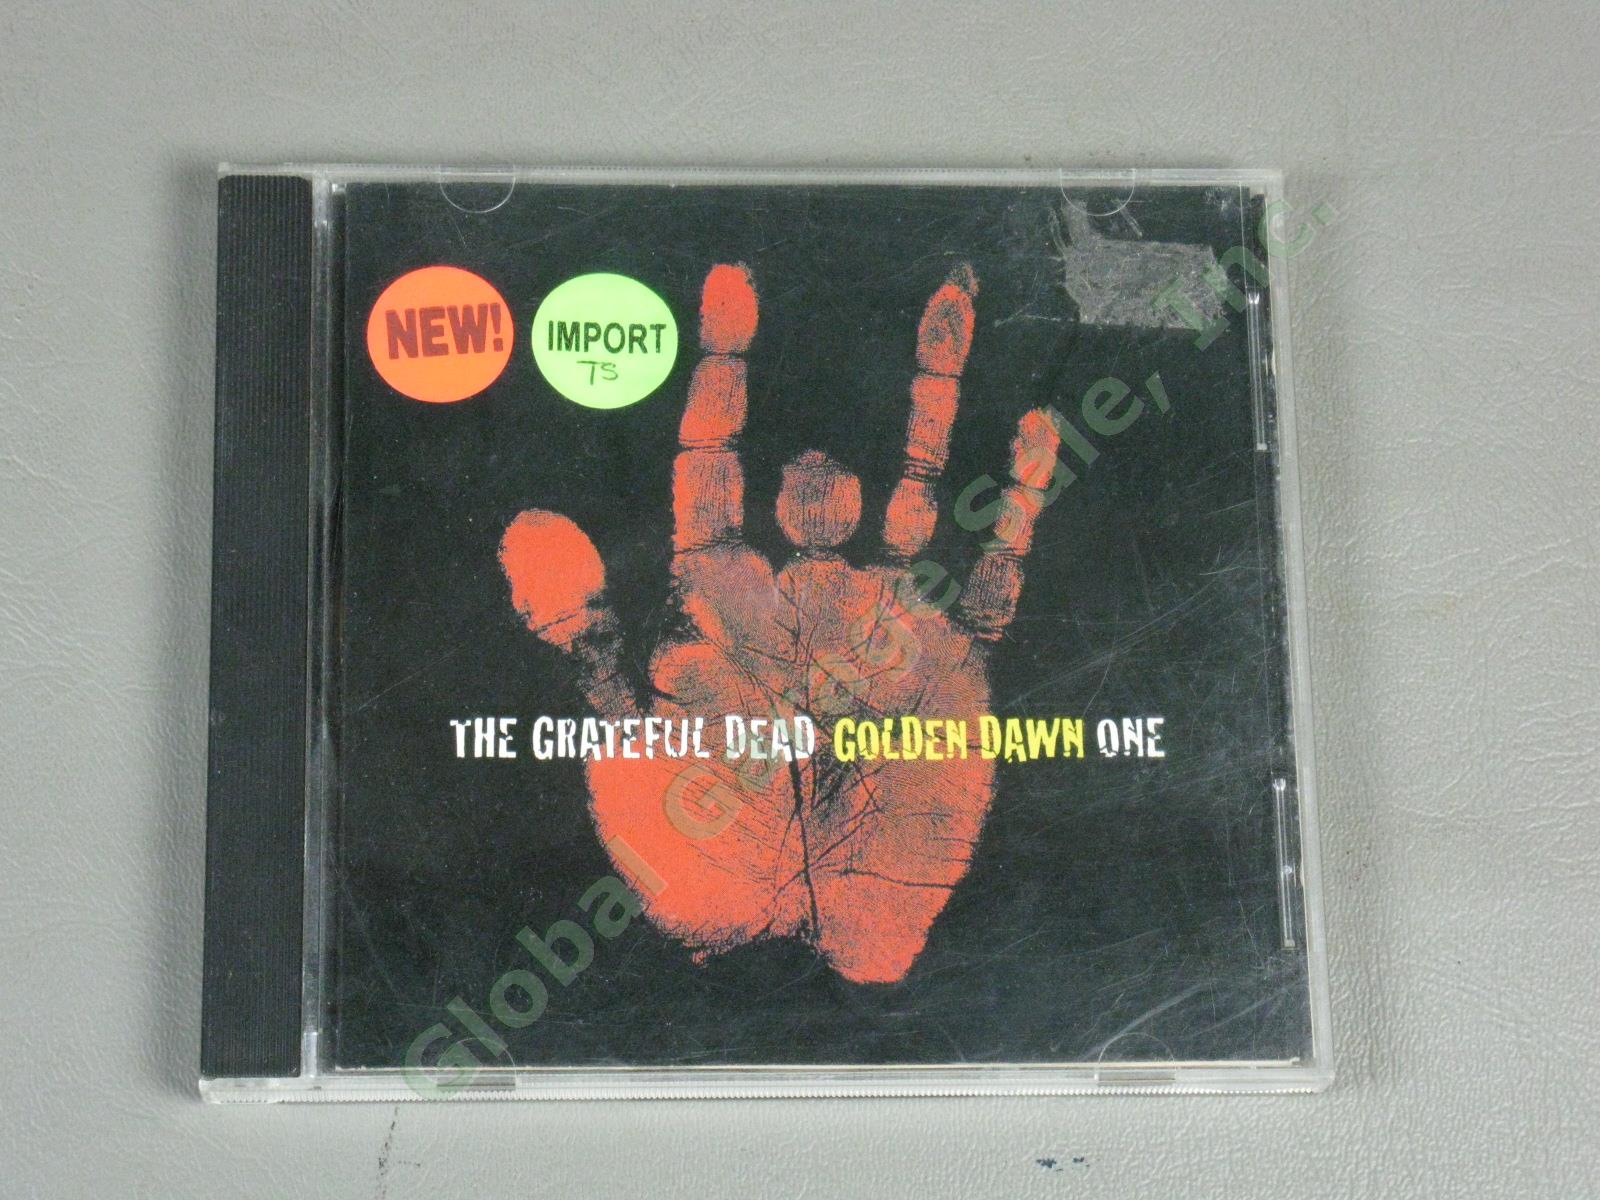 Vtg 1990s Grateful Dead Live Unreleased Show Concert Import CD VHS Lot 16 Discs 7